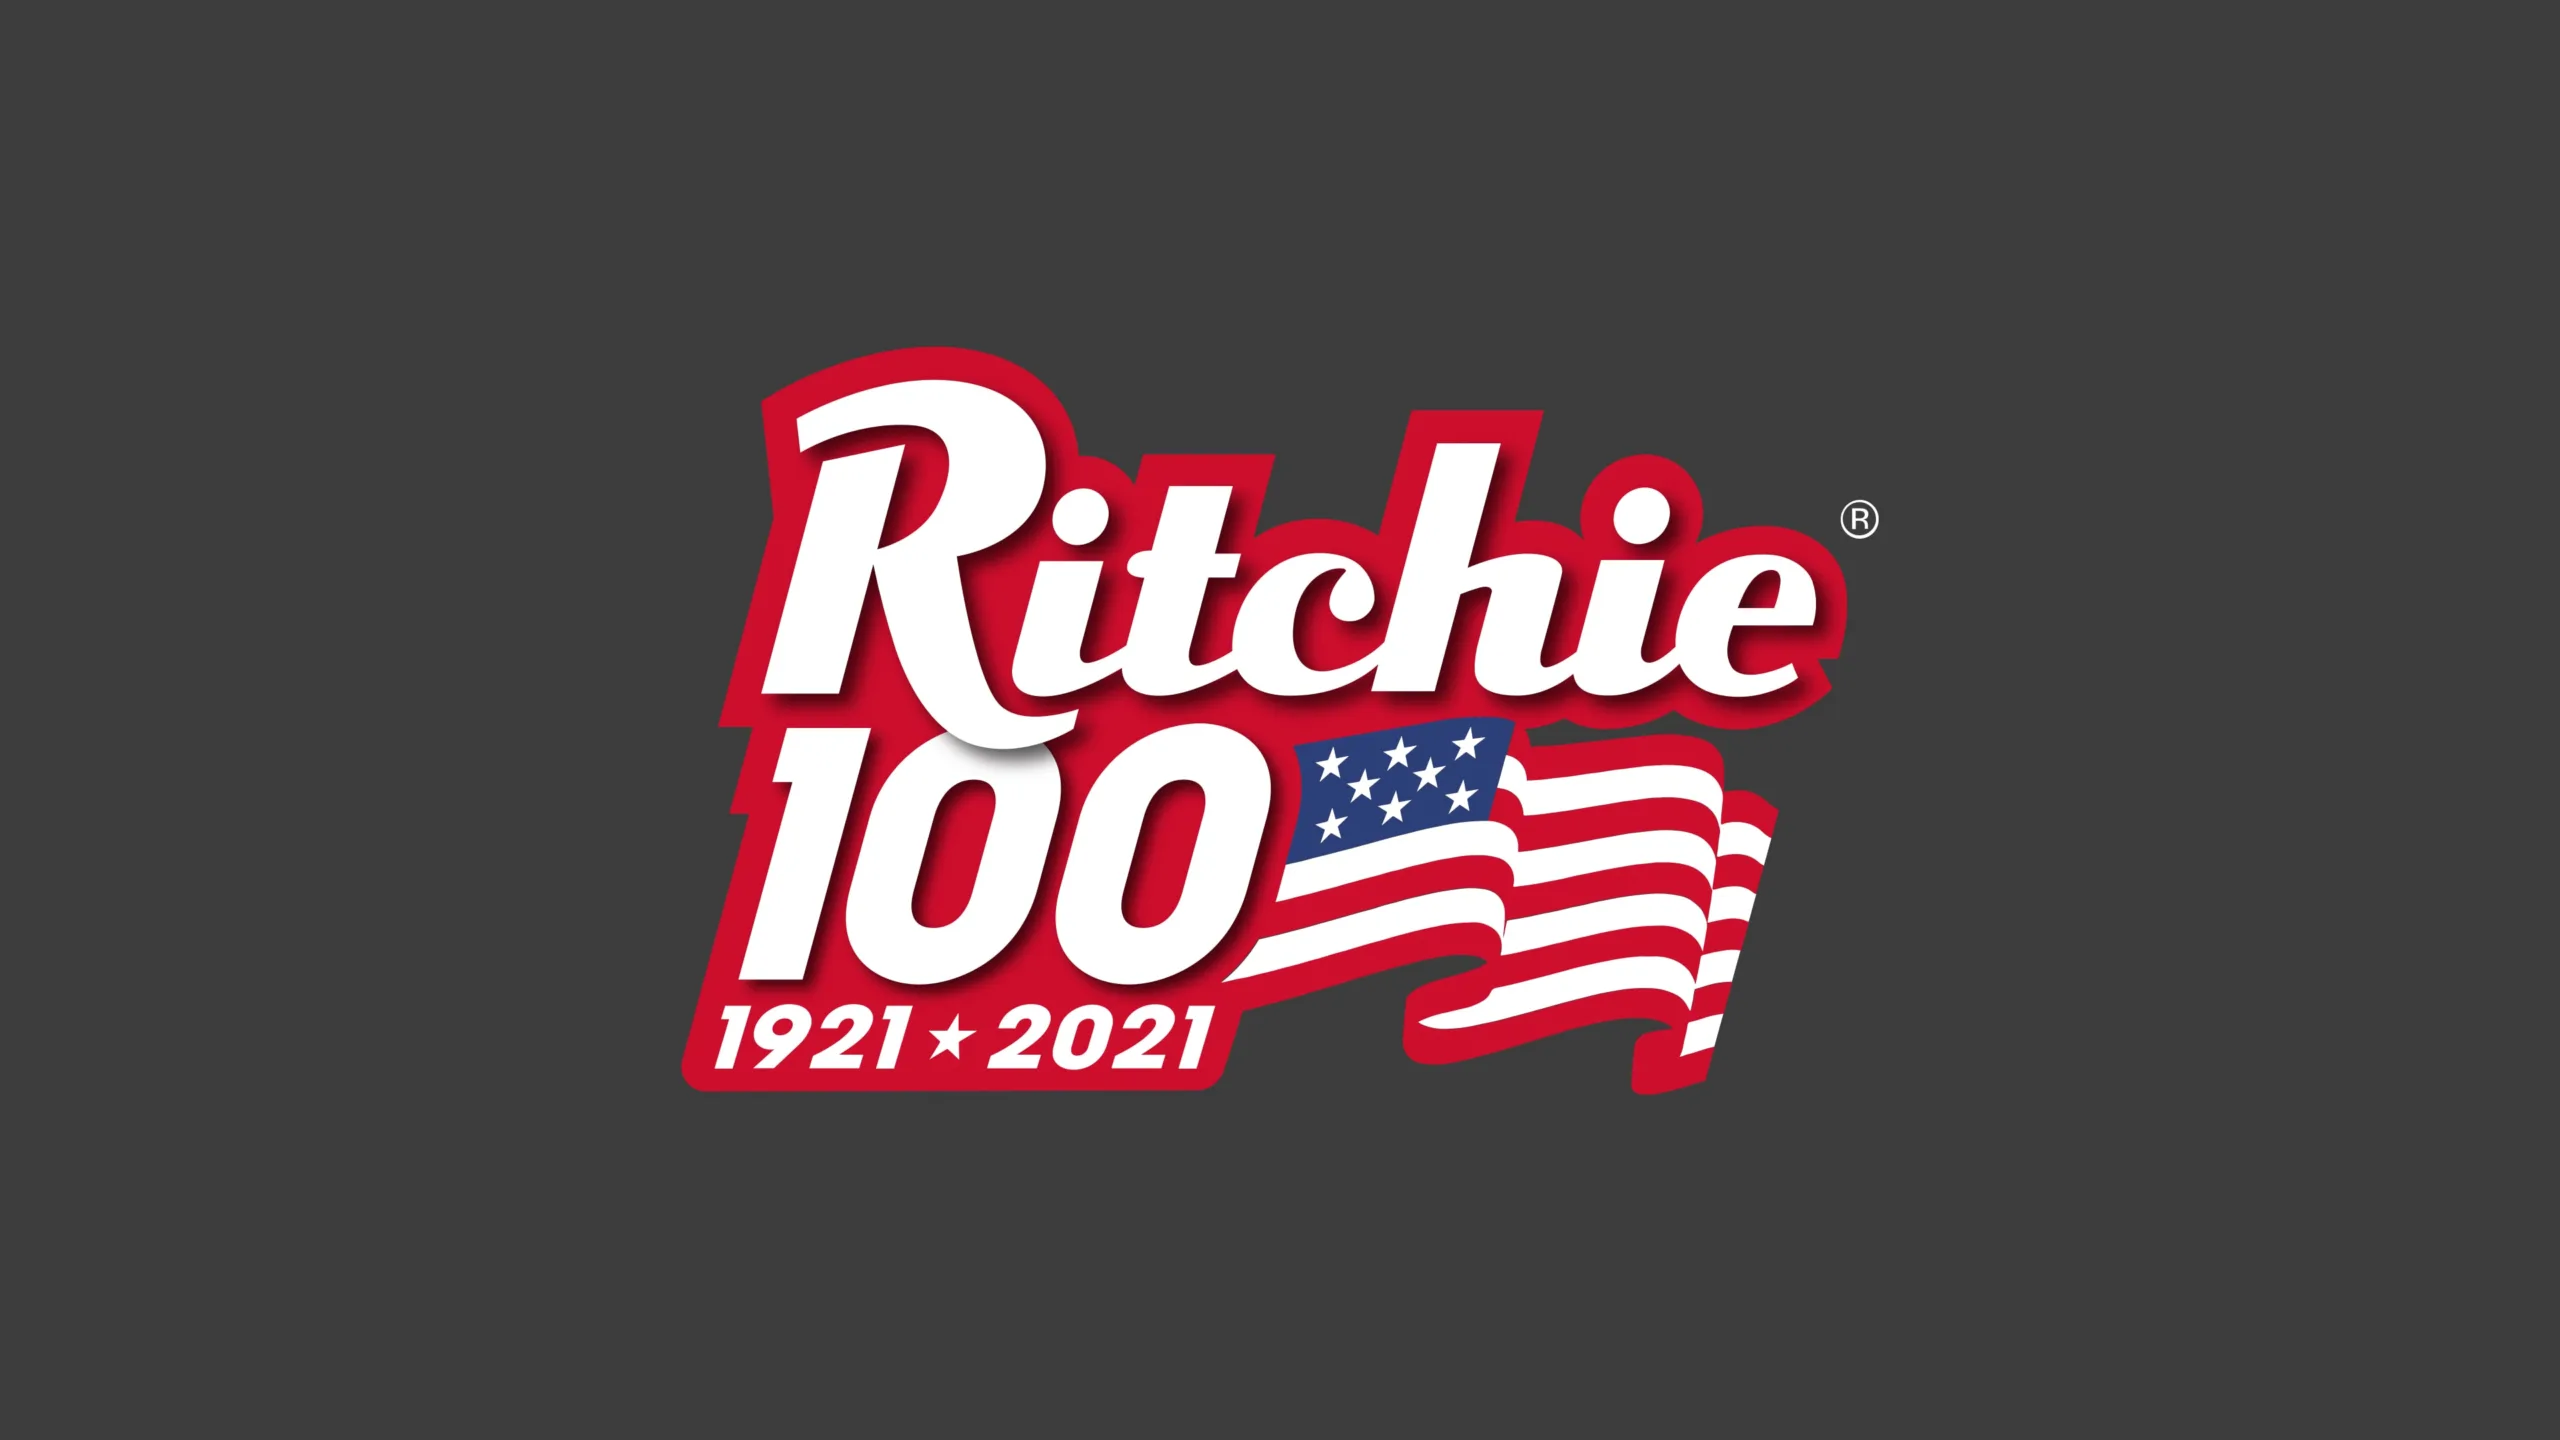 Ritchie 100 logo